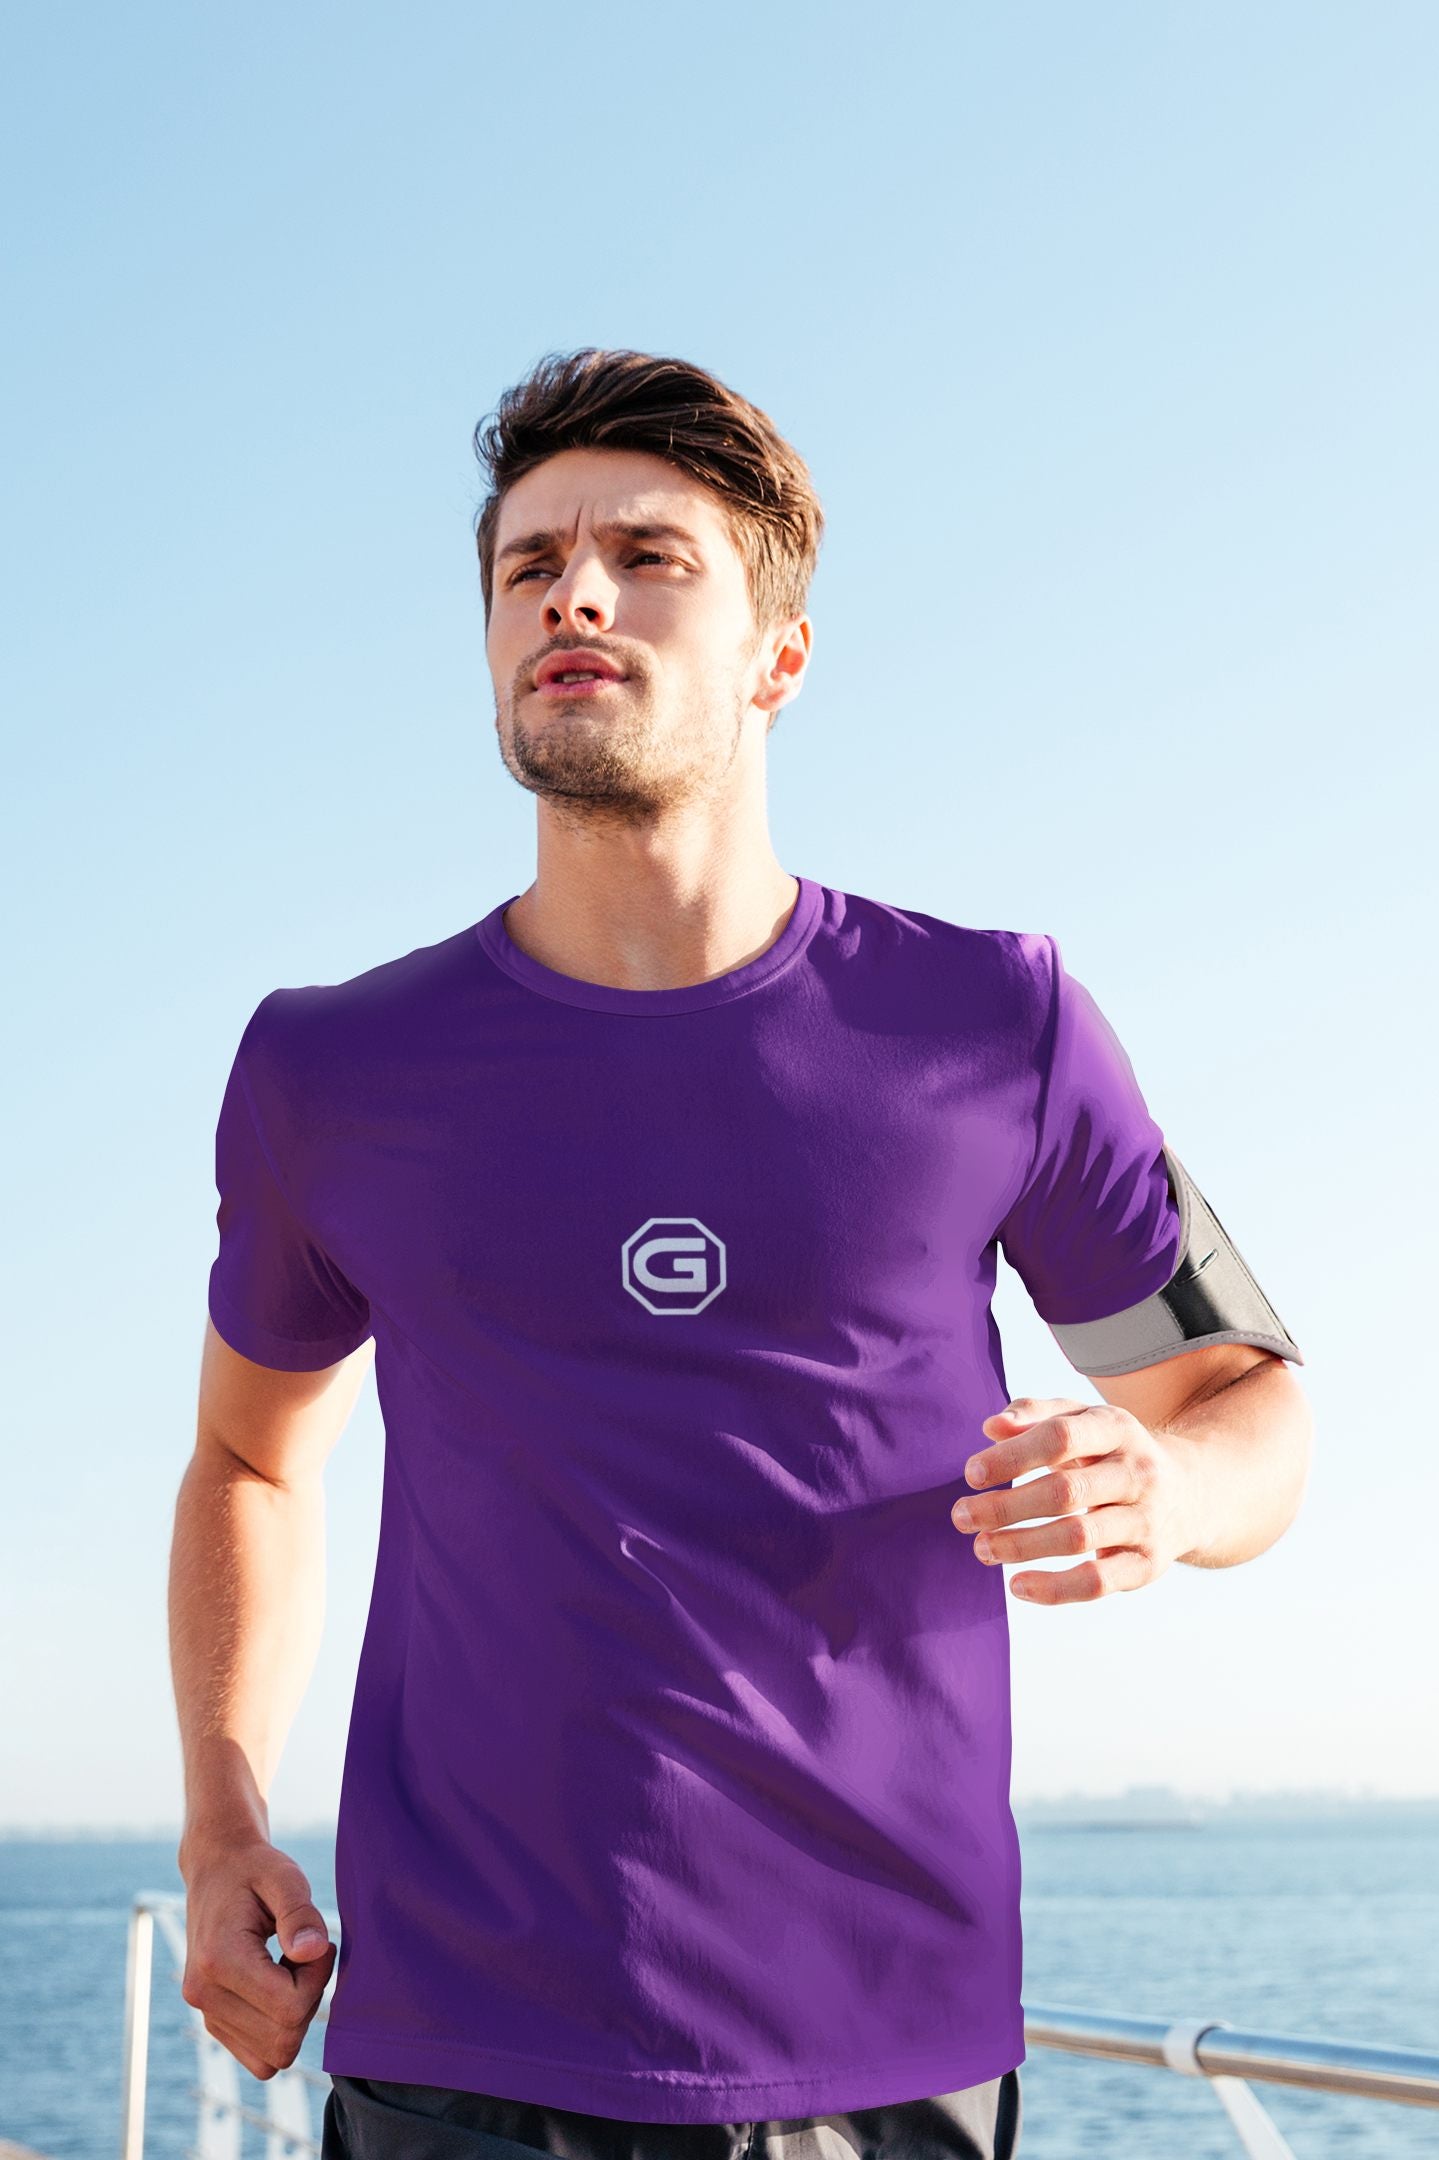 Stylish T shirts for men Active / Leisure Wear | Gymate Large G logo purple